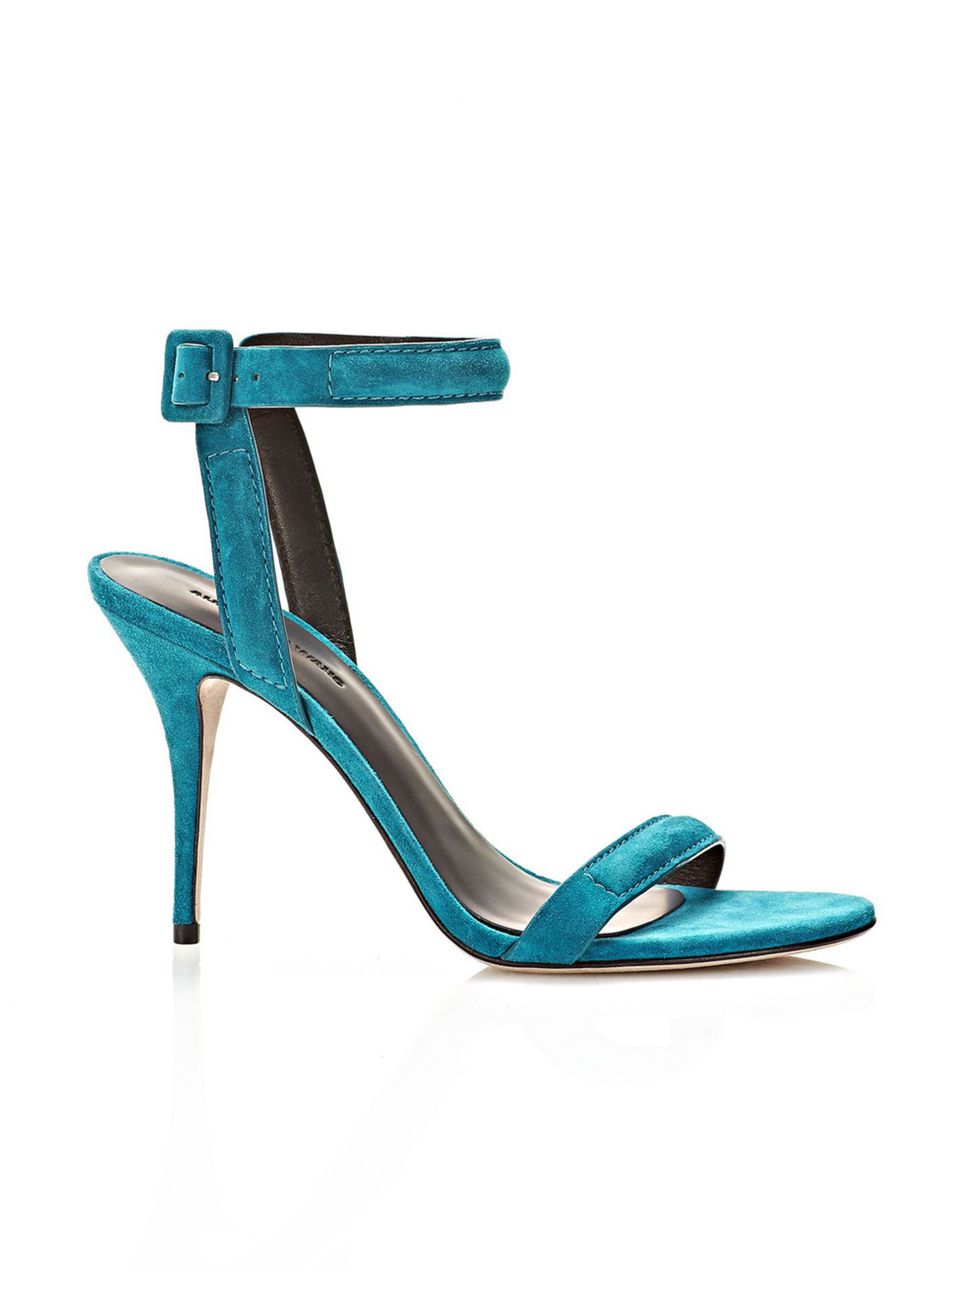 Blue, High heels, Teal, Aqua, Turquoise, Azure, Basic pump, Electric blue, Sandal, Foot, 